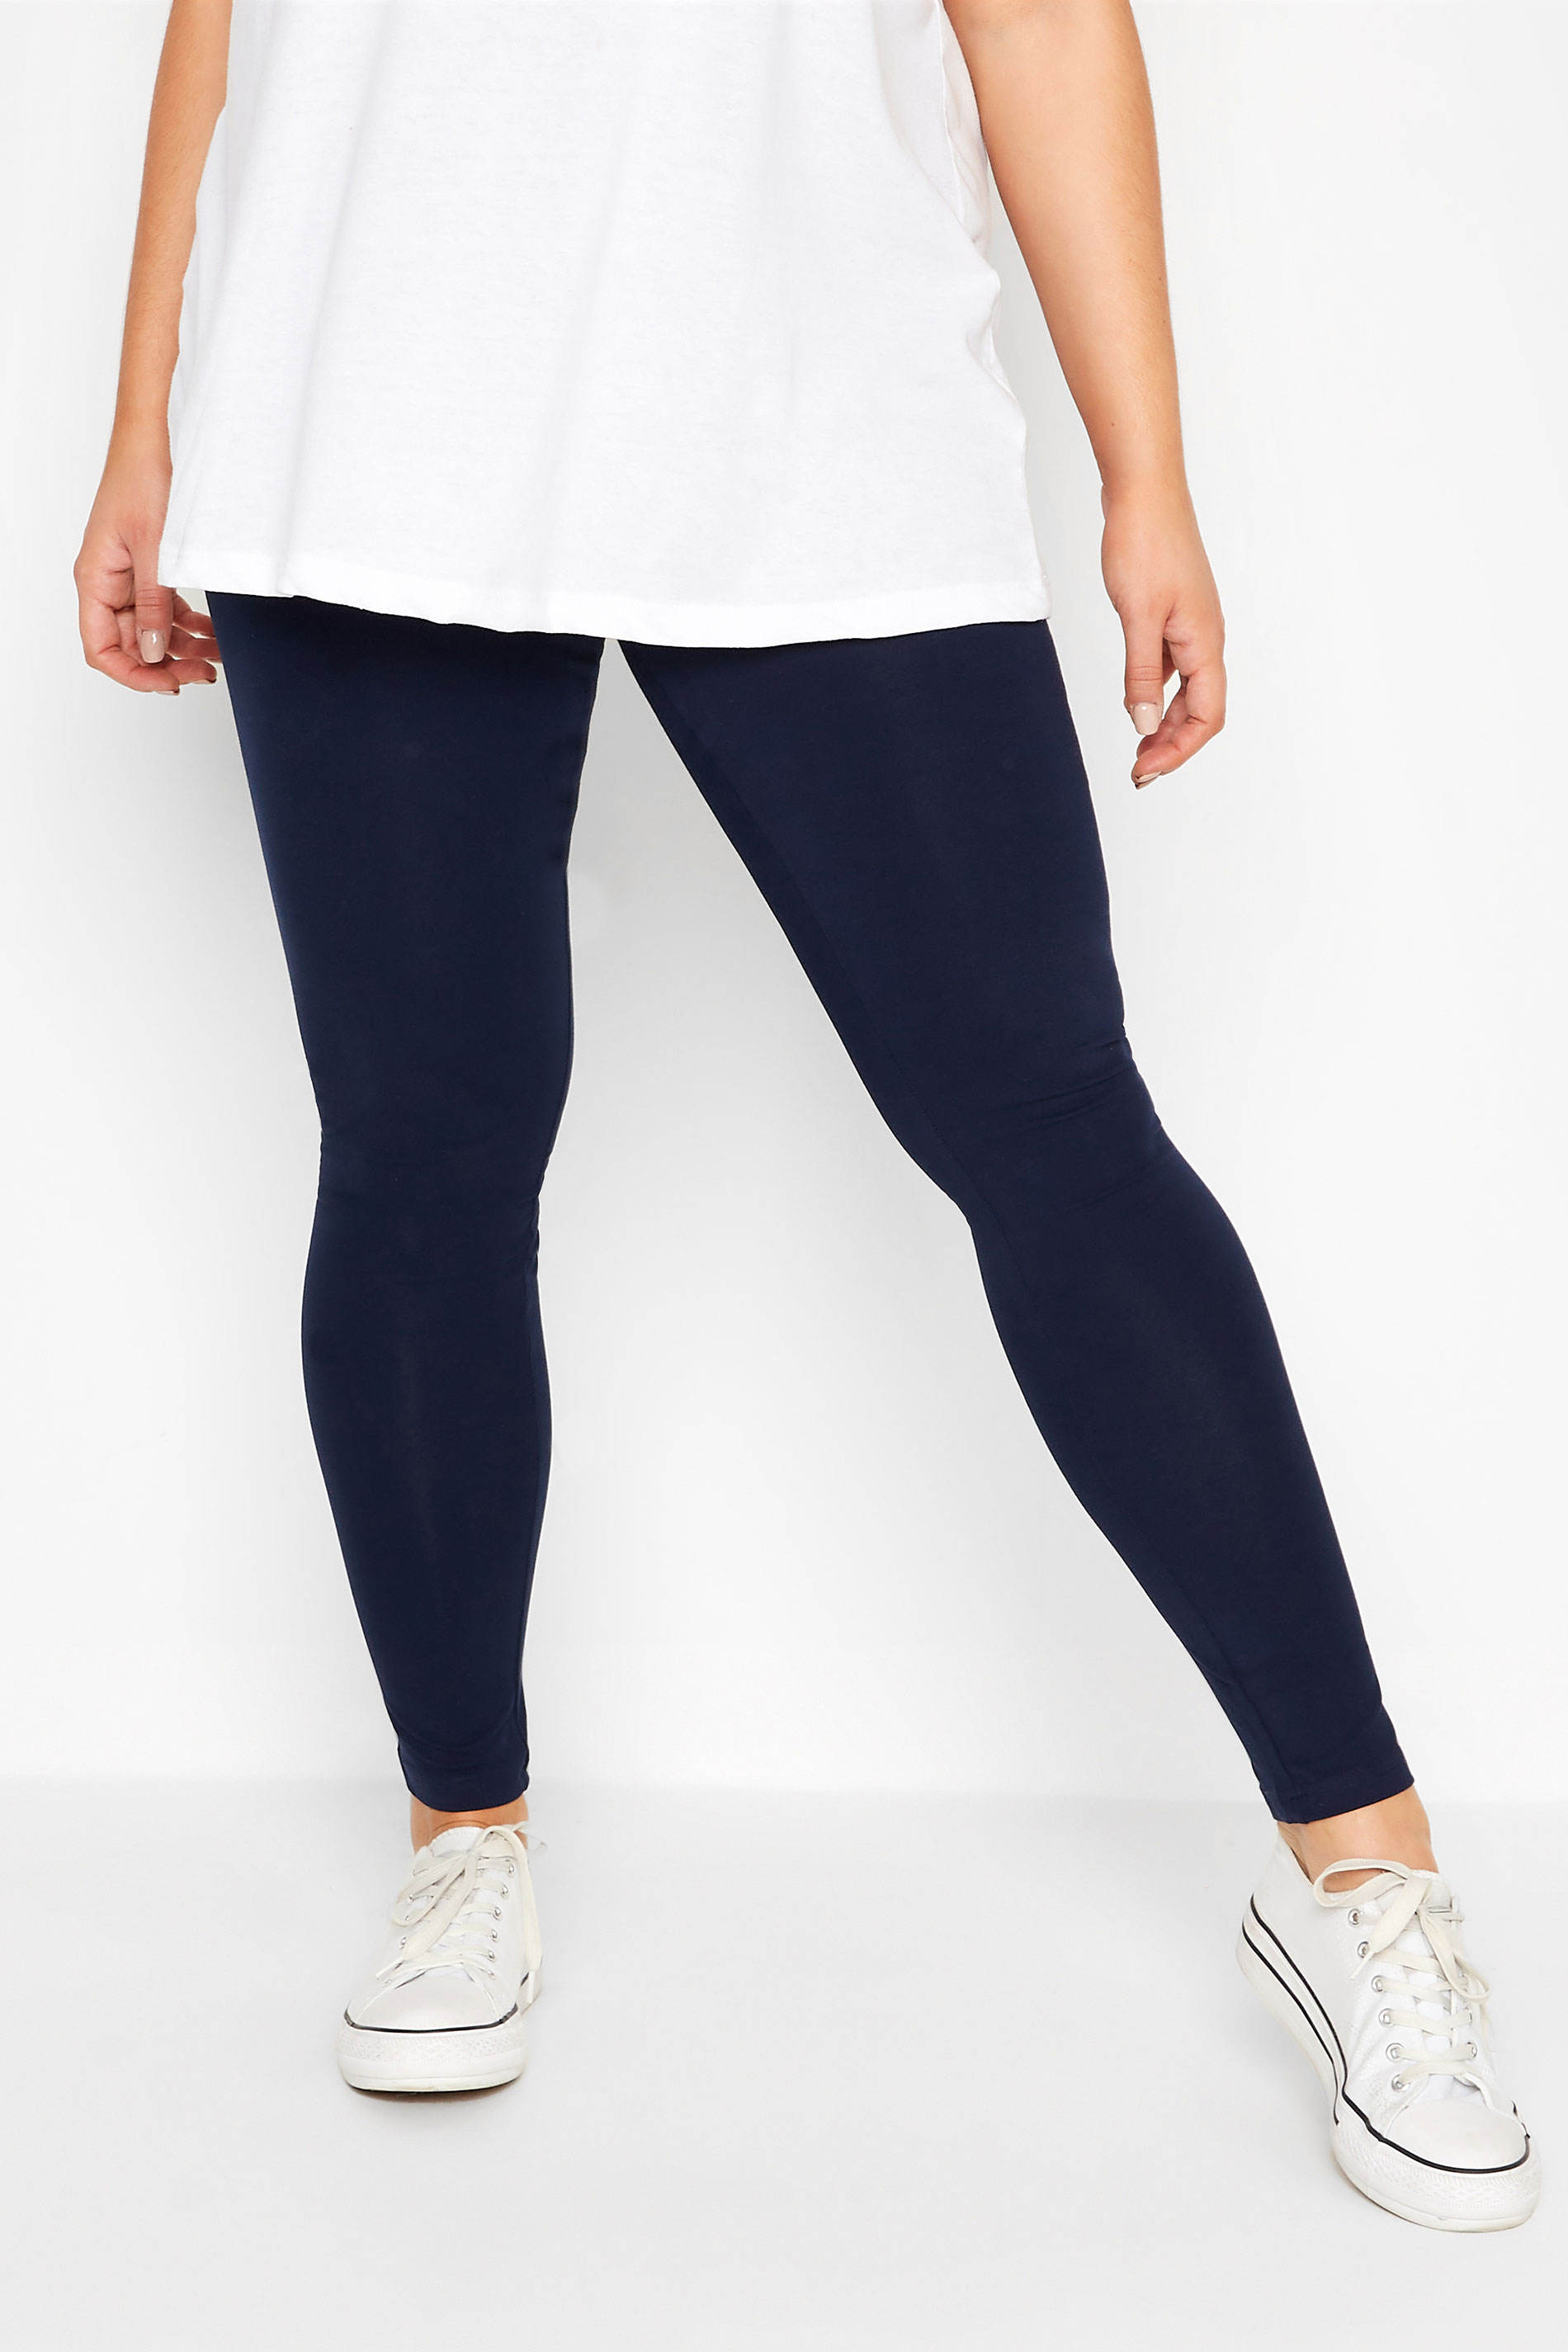 Plus Size Navy Blue Cotton Leggings | Yours Clothing 1